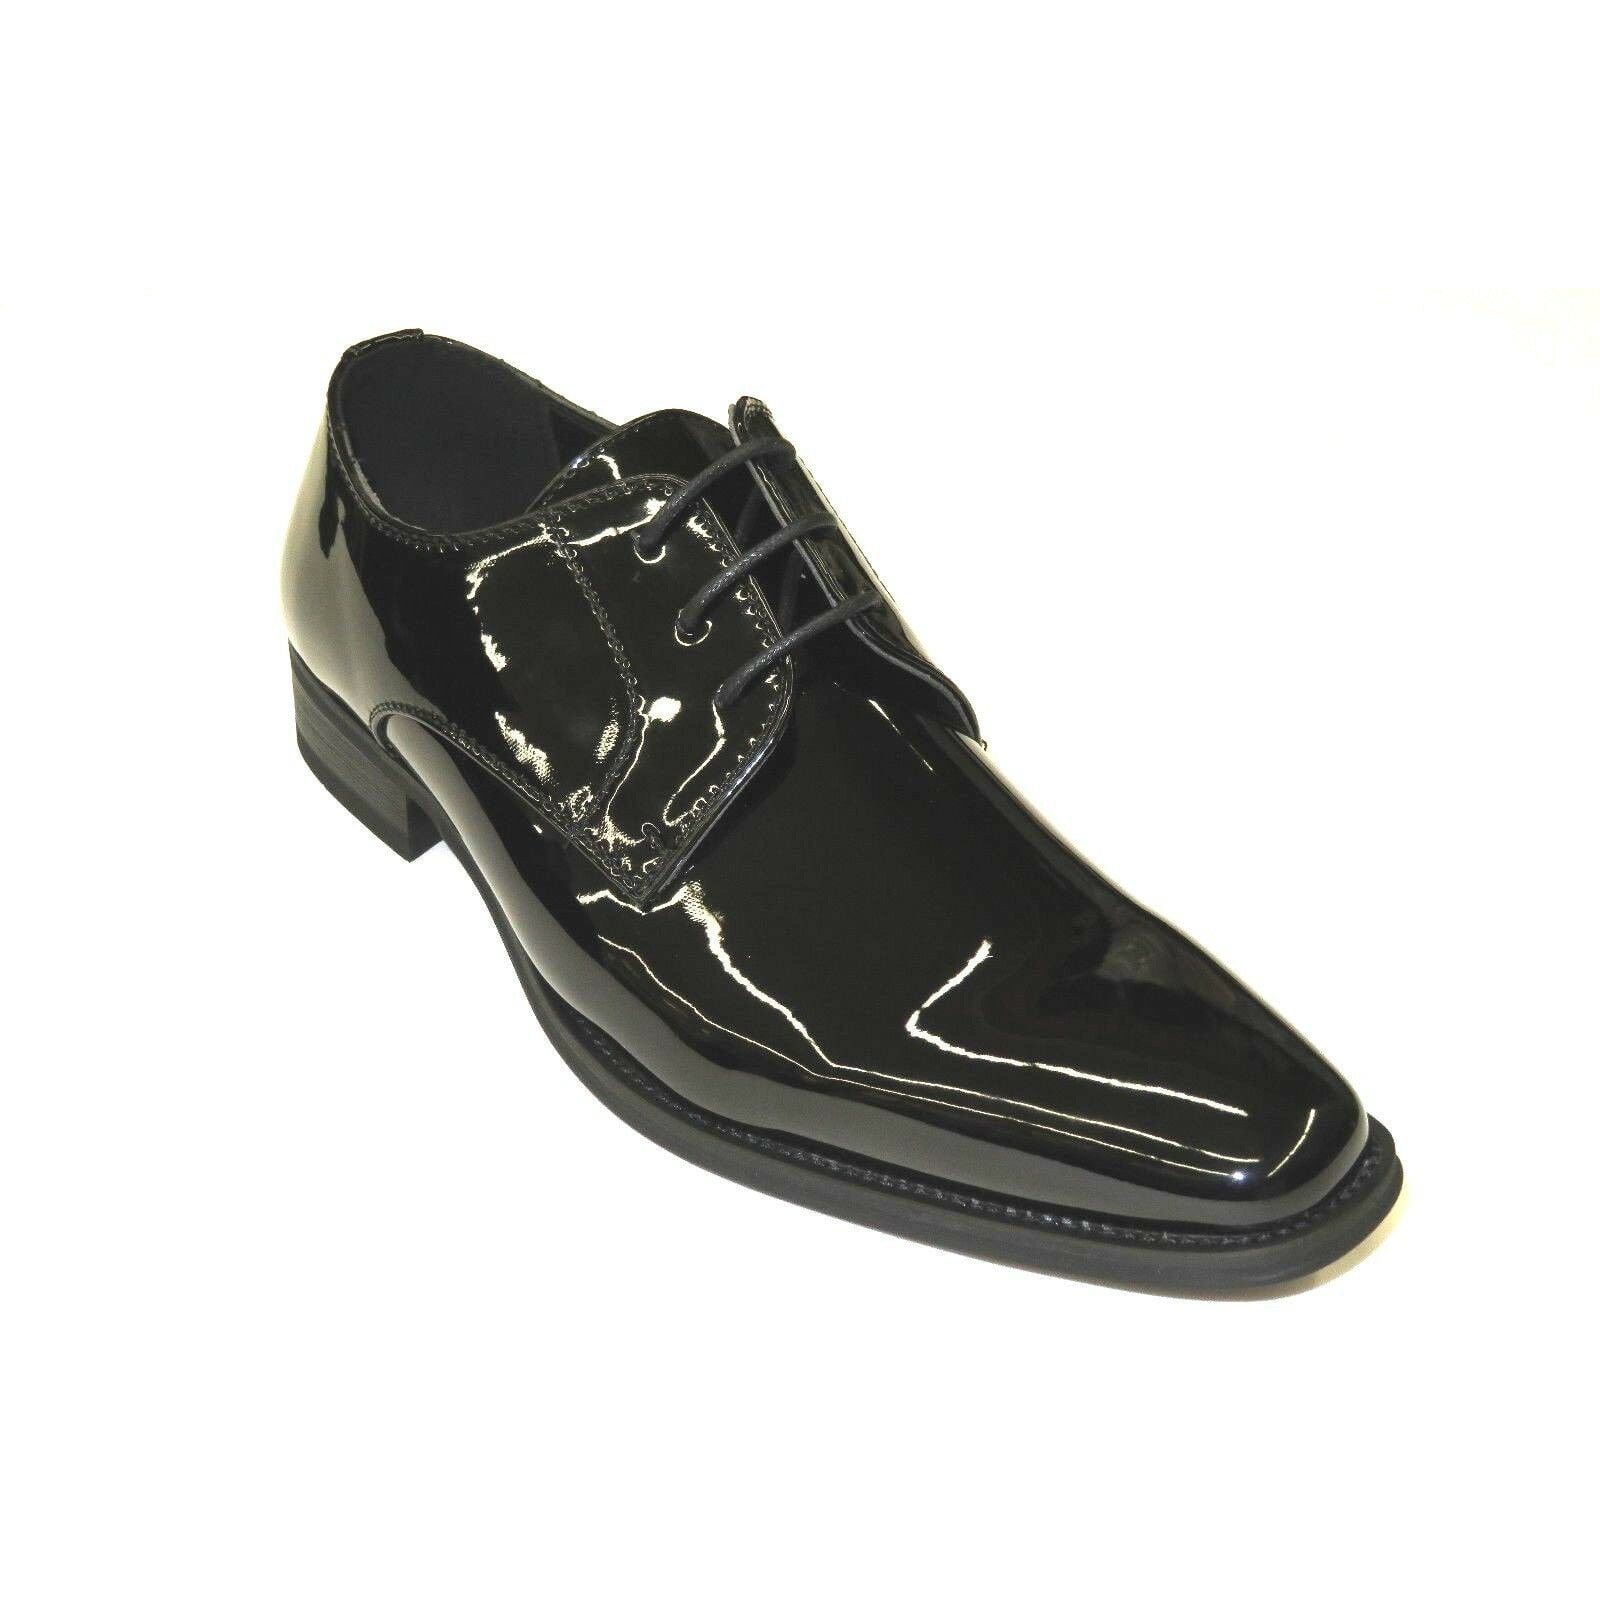 Santino Luciano - Mens Formal Tuxedo Shoes SANTINO LUCIANO patent ...